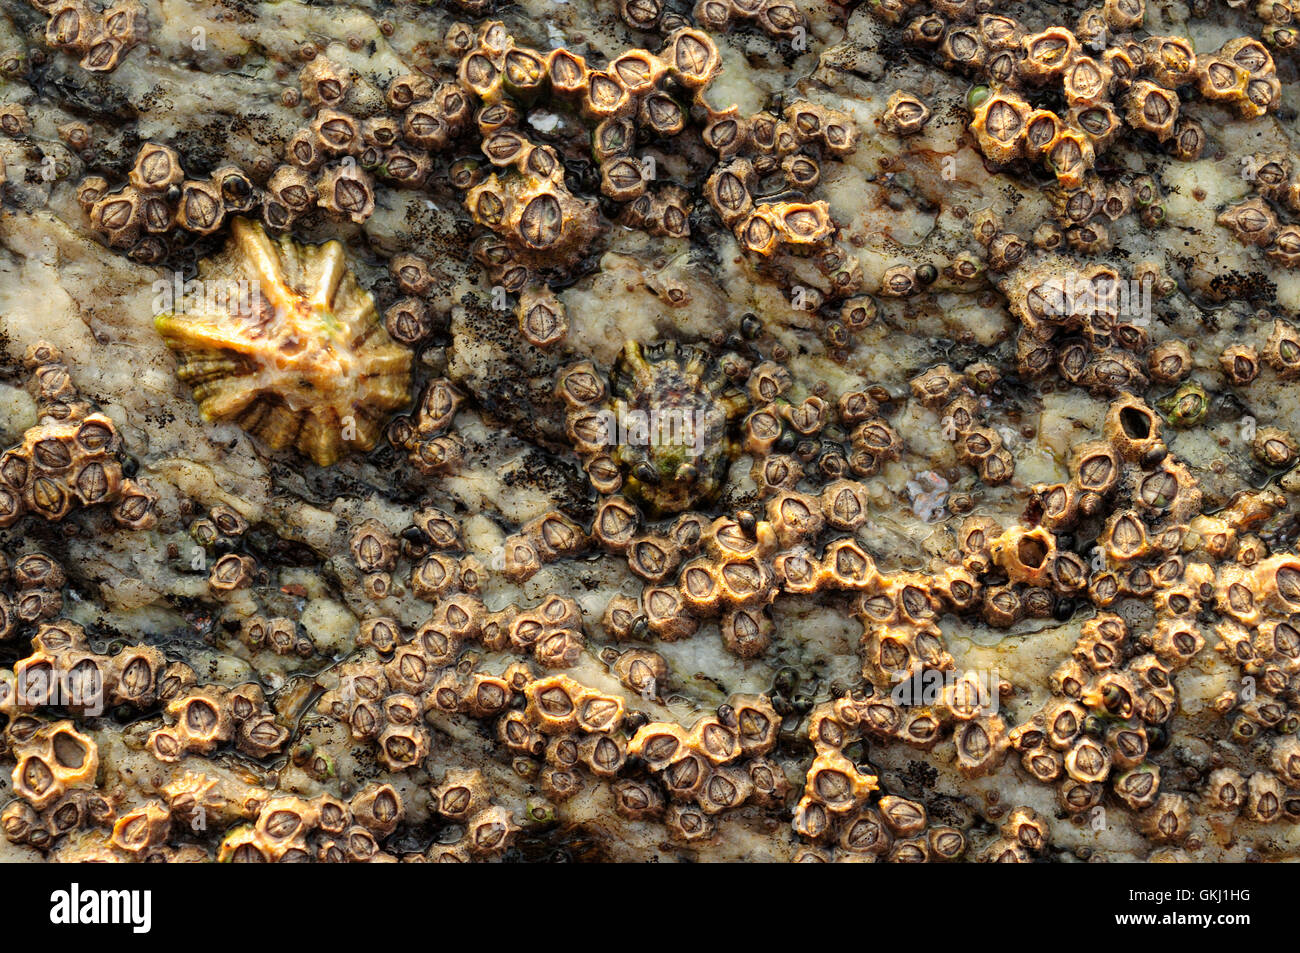 Coastal rocas cubiertas de bellotas de mar (Chthamalus montagui) y lapas Foto de stock